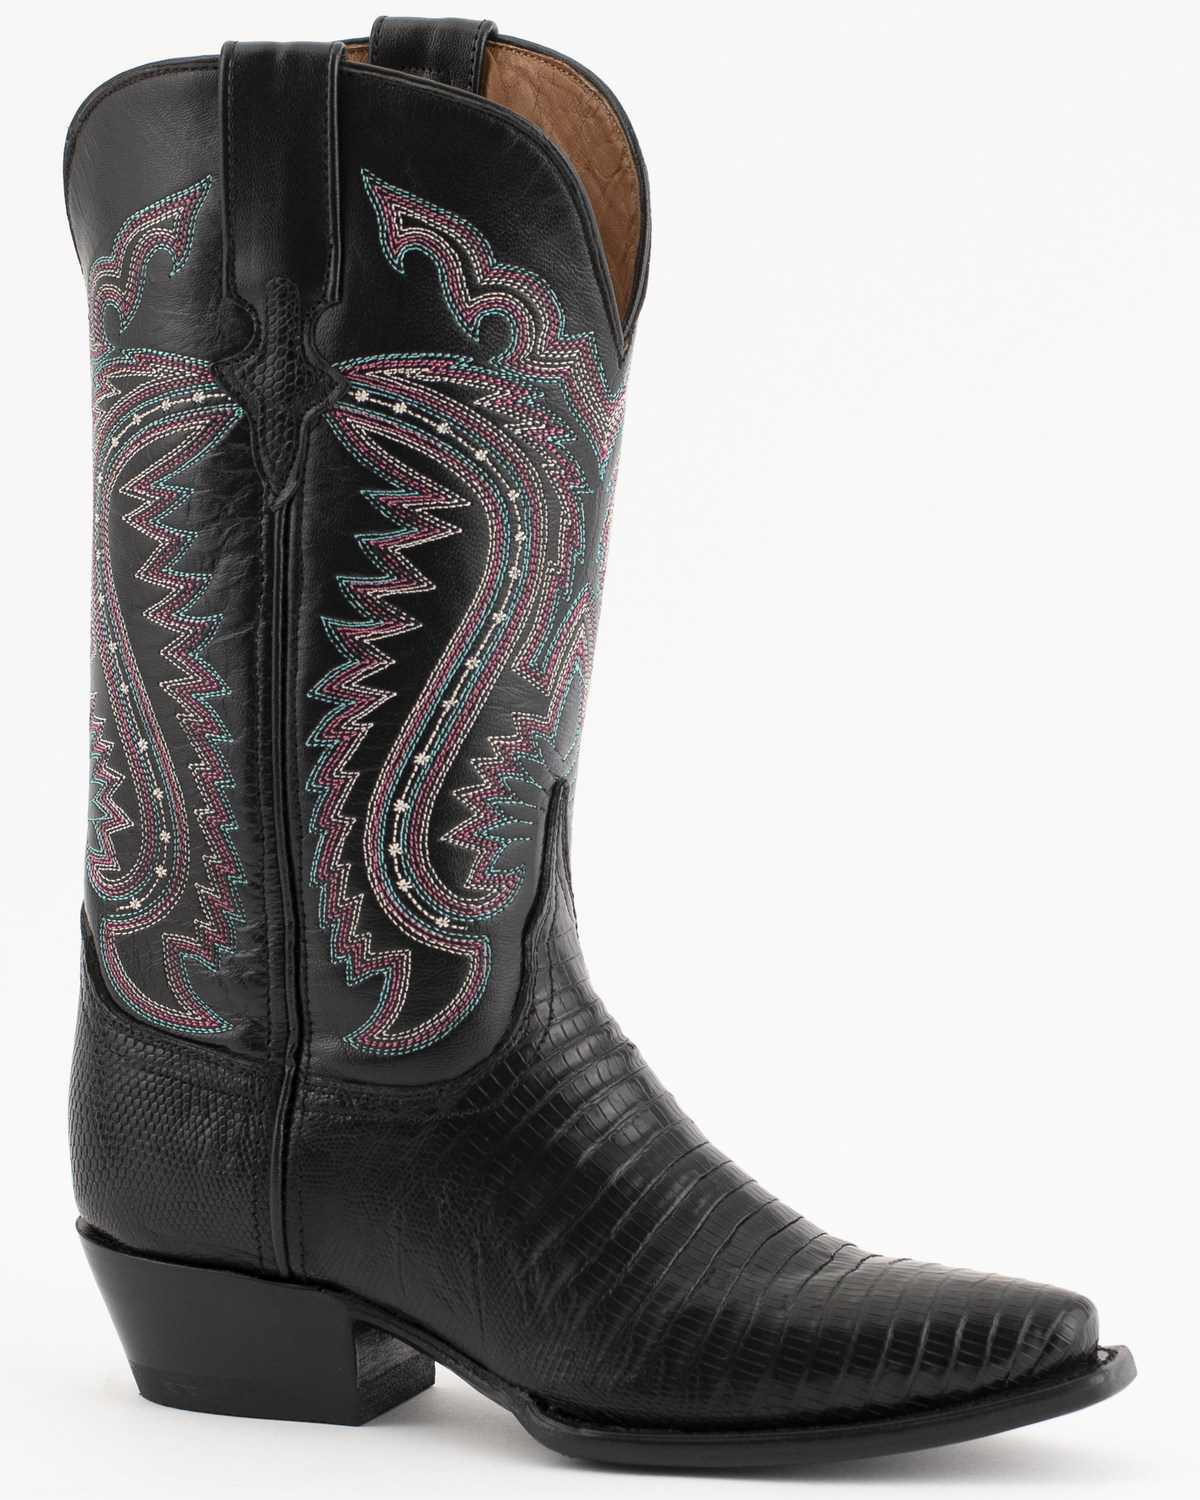 Ferrini Women's Lizard Western Boots - Snip Toe